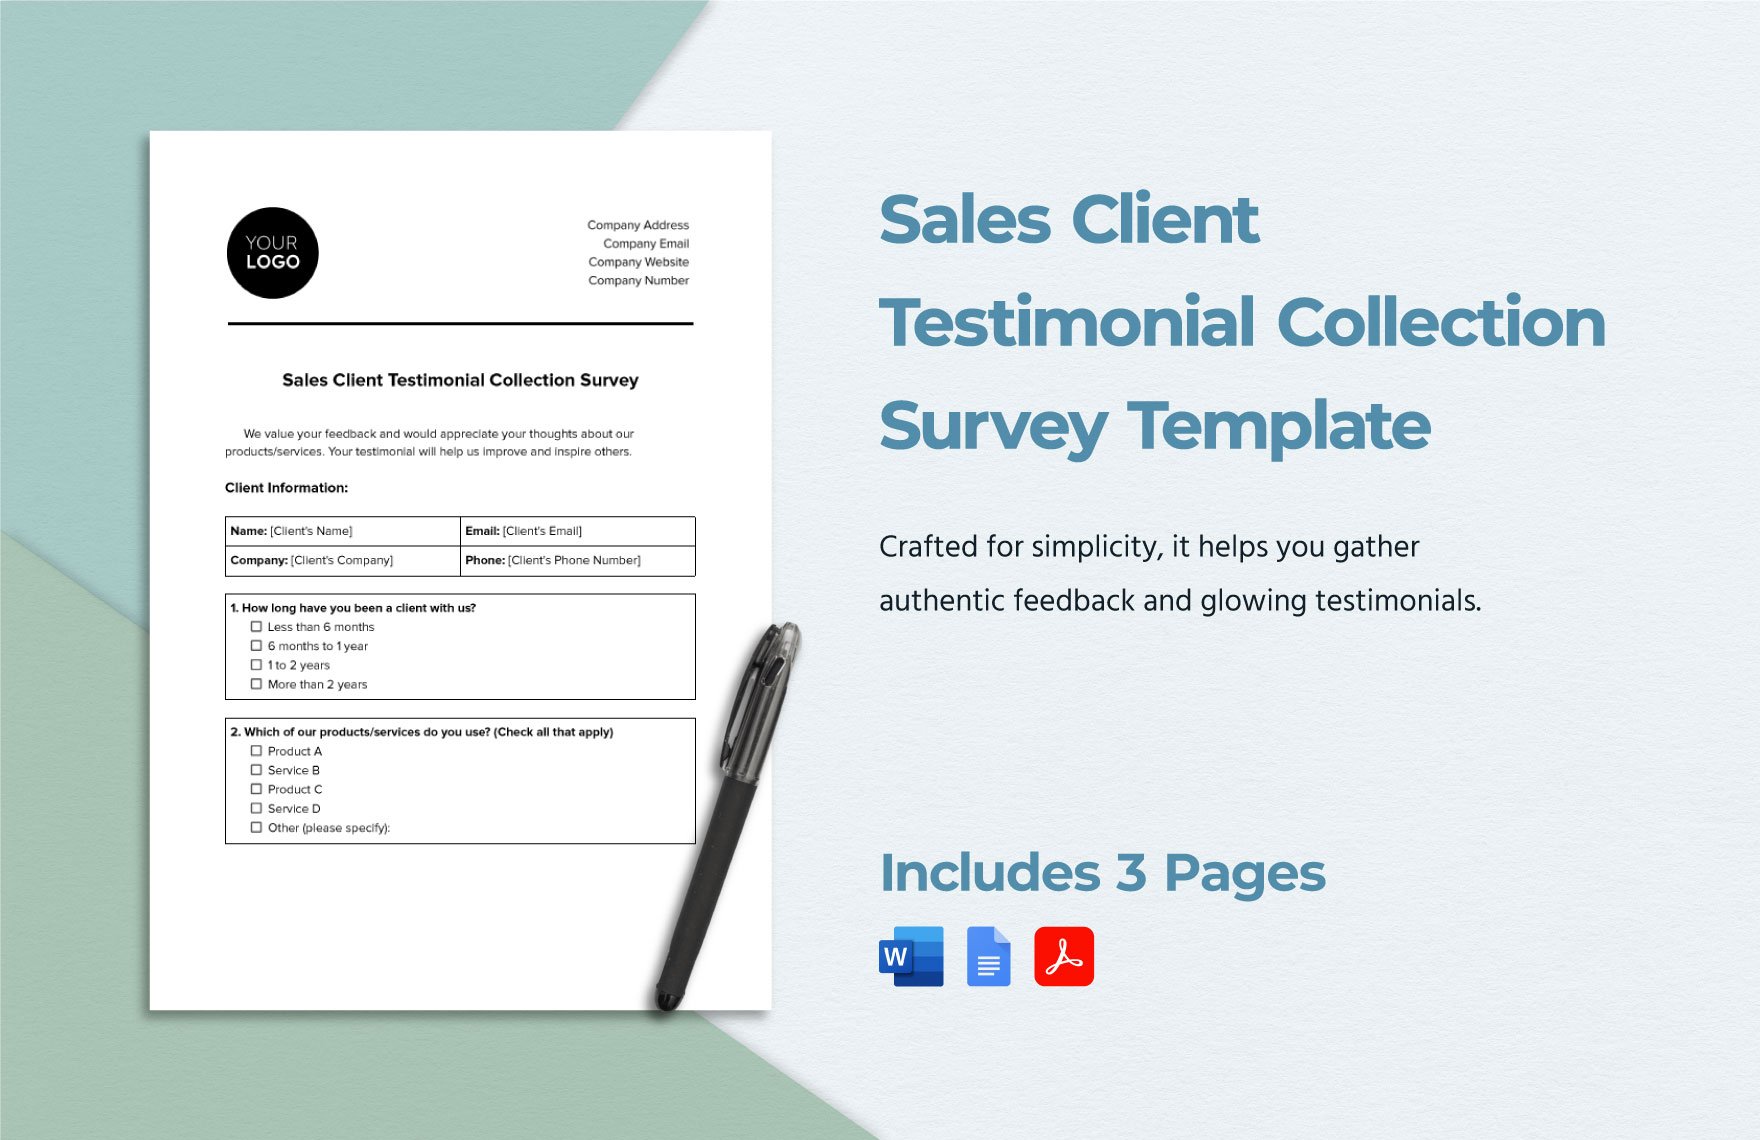 Sales Client Testimonial Collection Survey Template